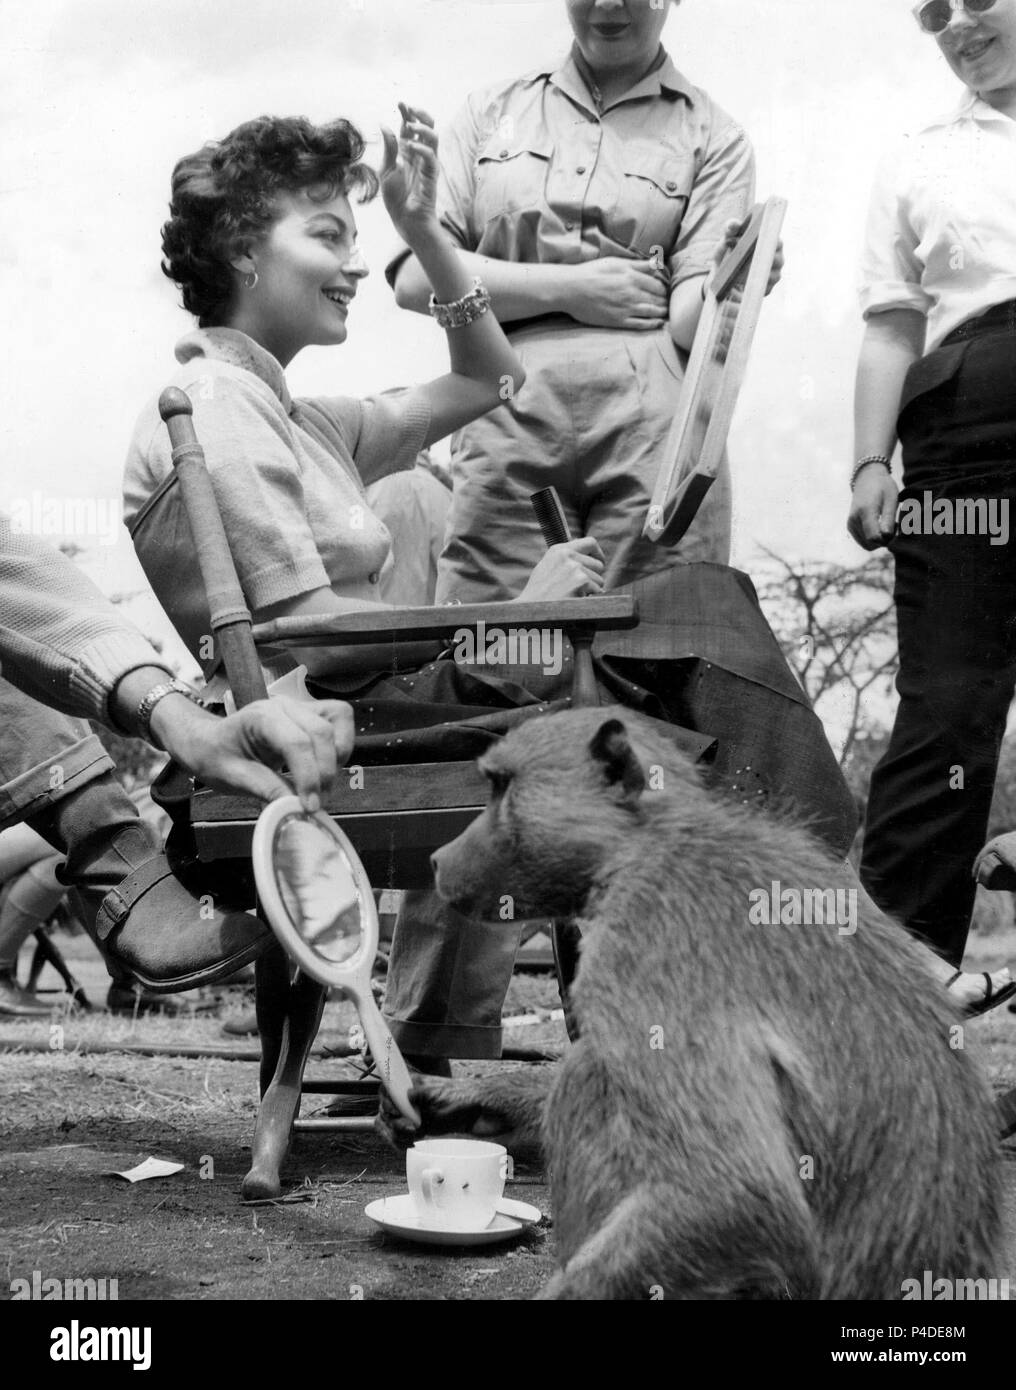 Original Film Titel: MOGAMBO. Englischer Titel: MOGAMBO. Regisseur: John Ford. Jahr: 1953. Stars: Ava Gardner. Credit: M.G.M/Album Stockfoto